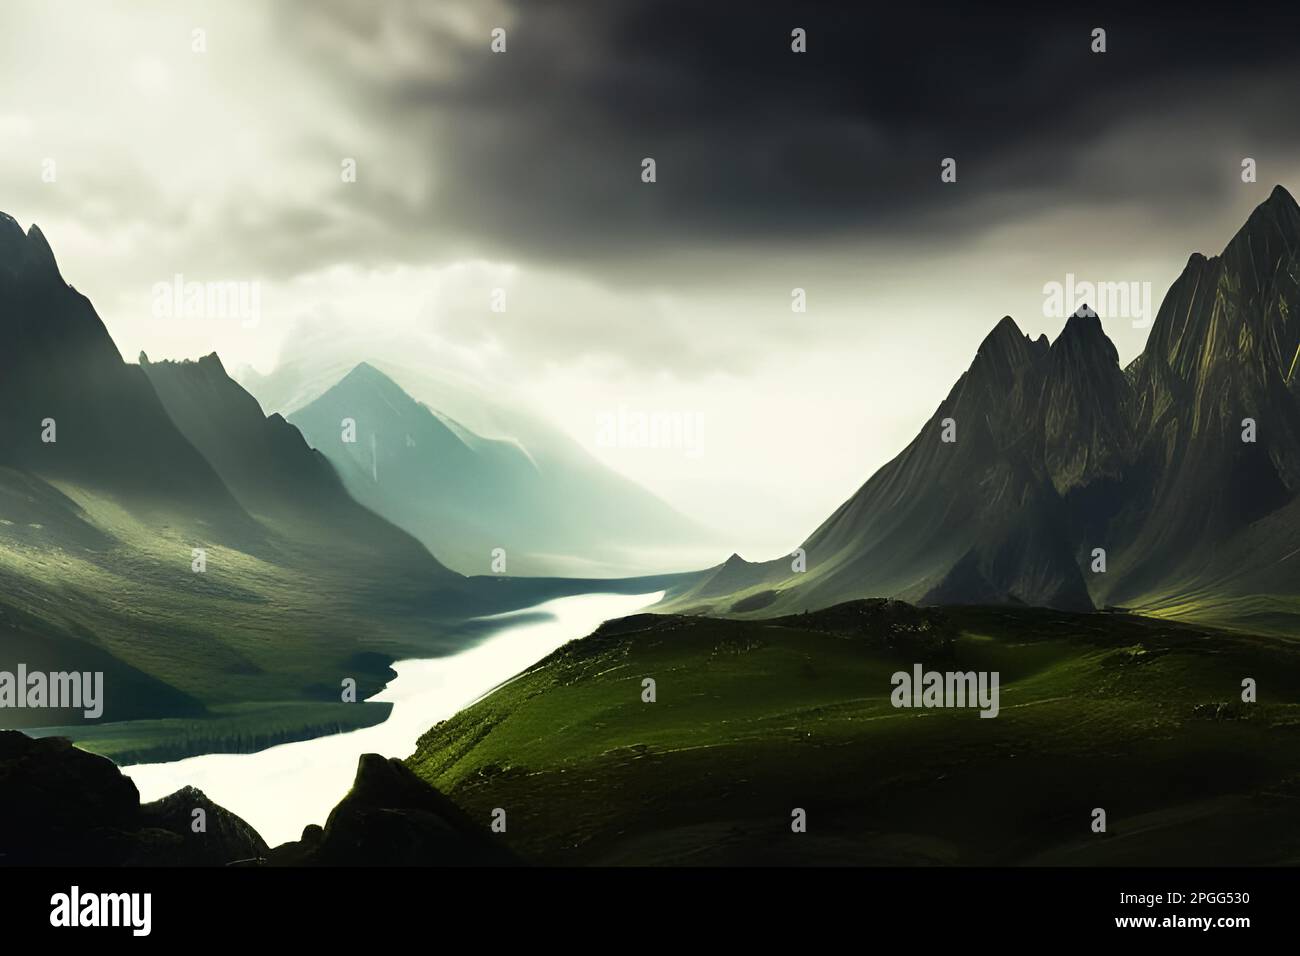 Remote rugged mountain range depiction. Edited AI generated image Stock Photo